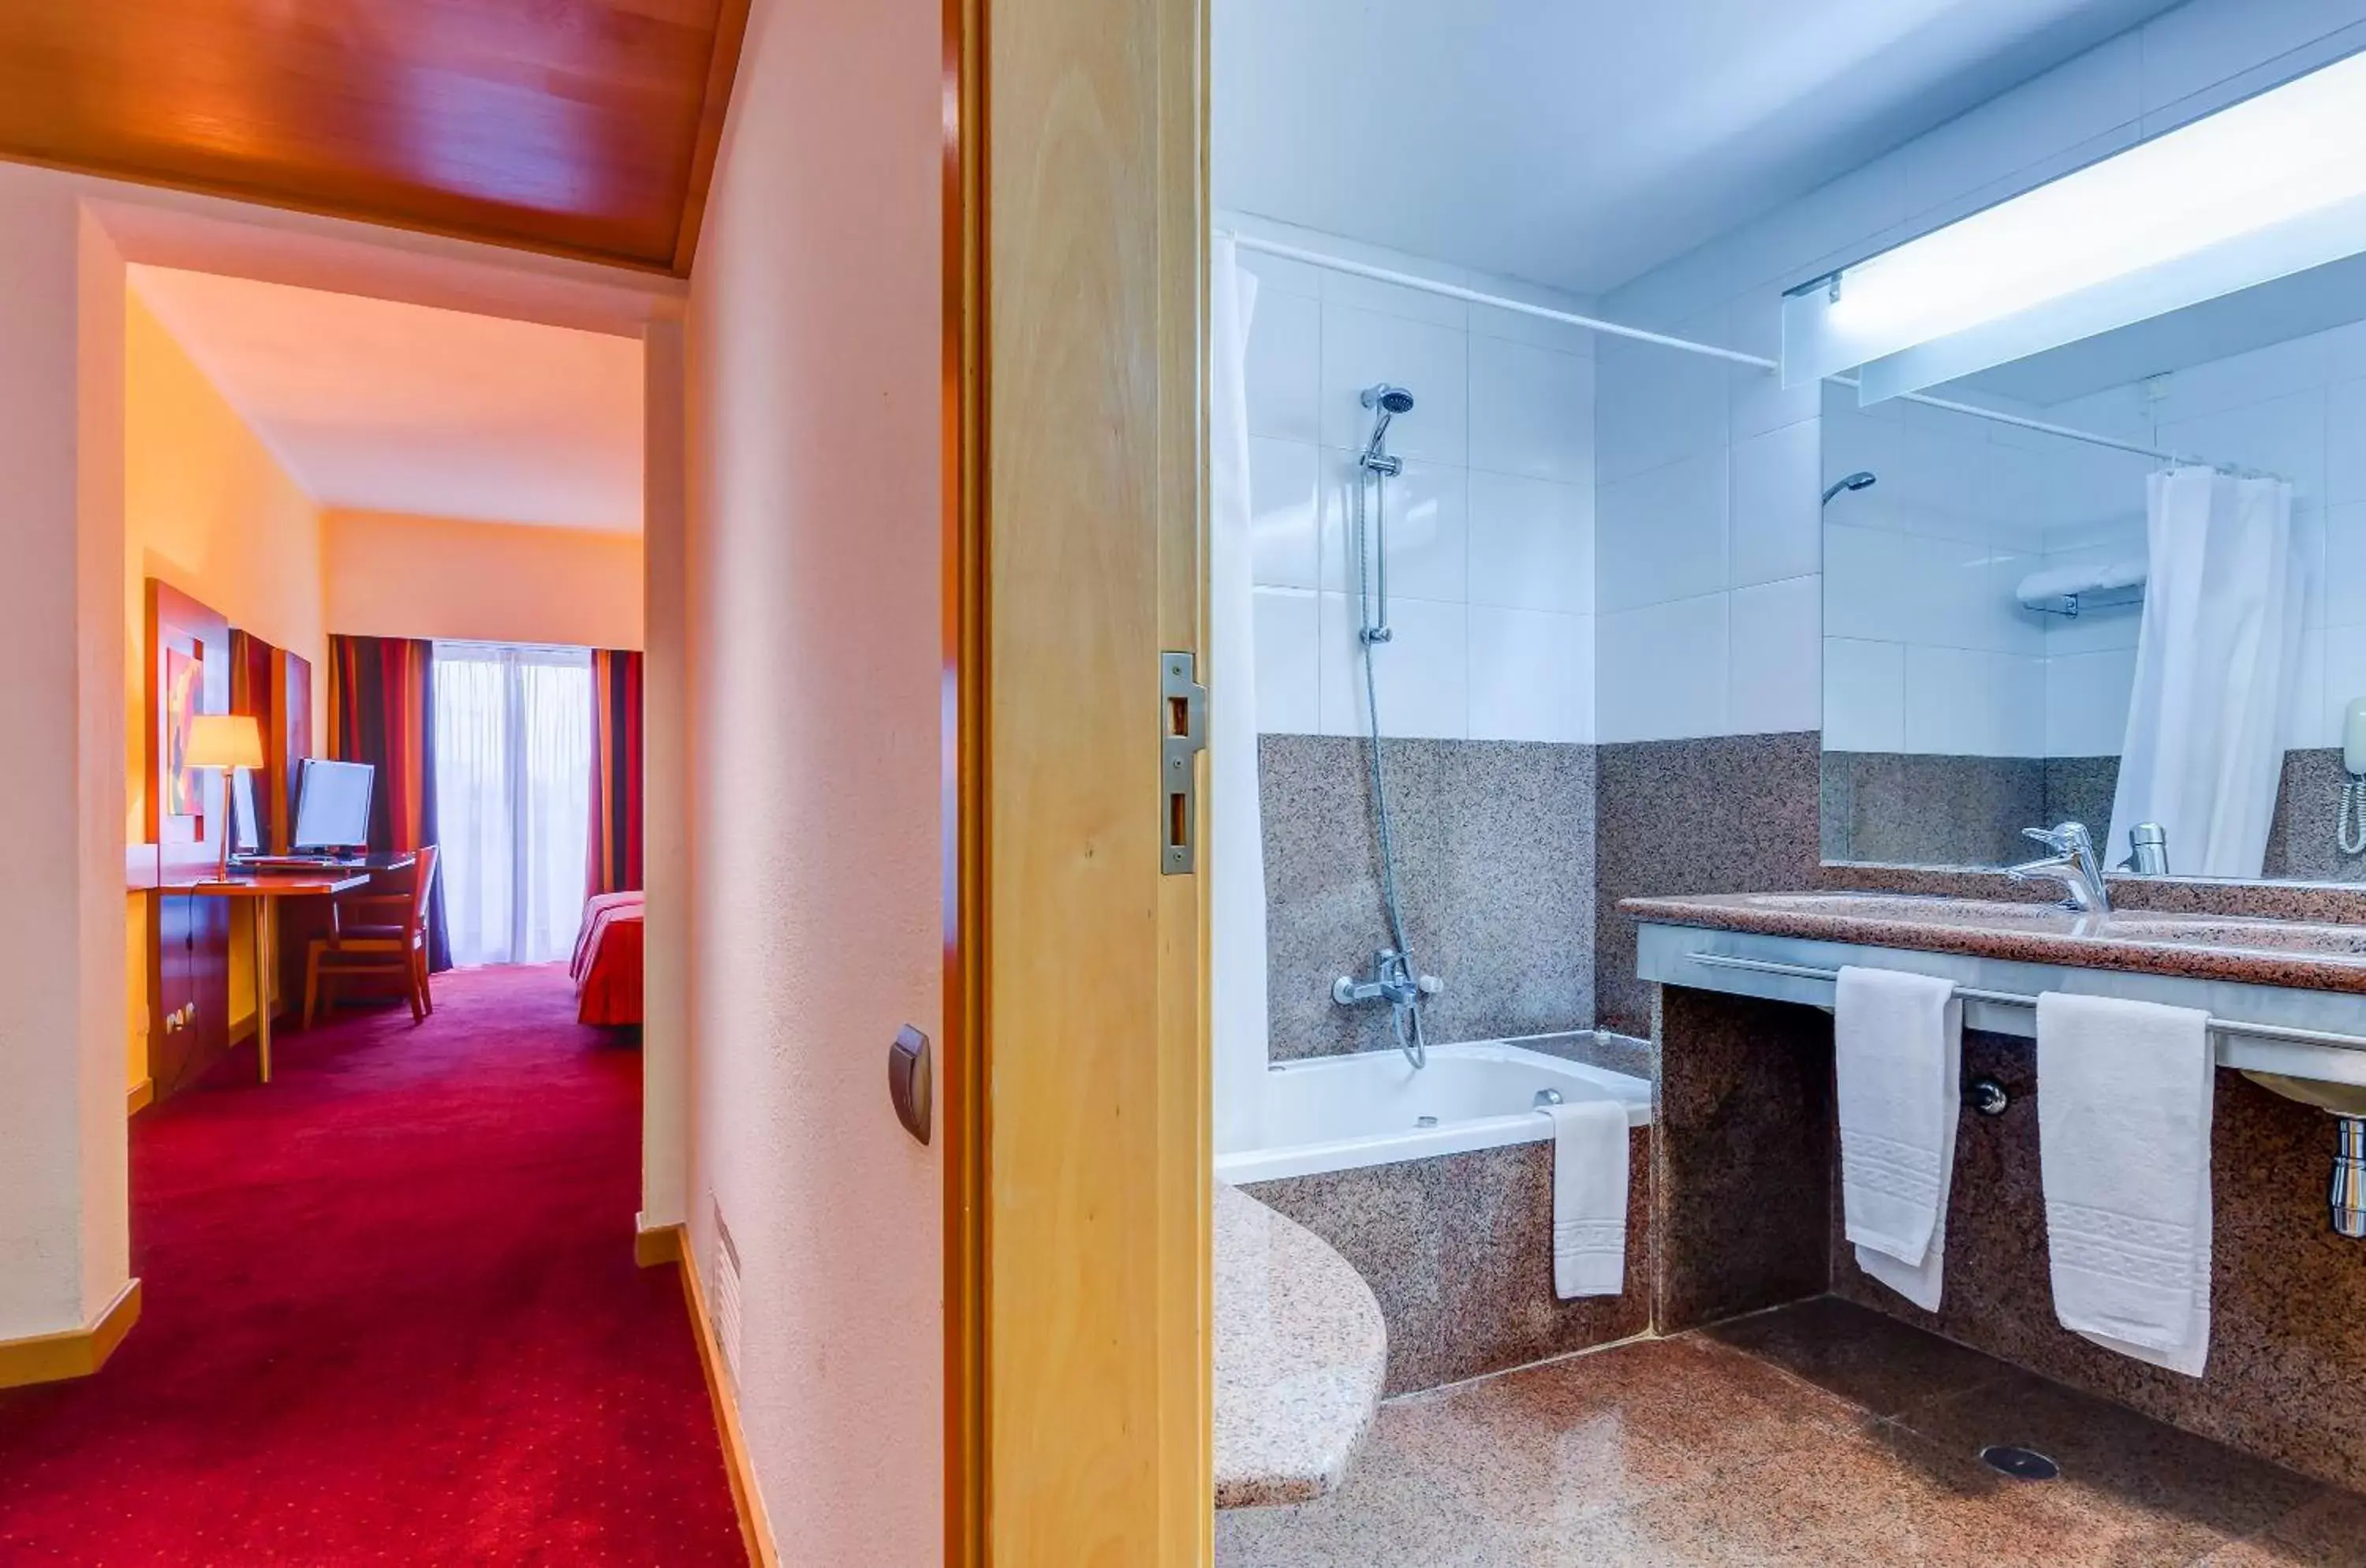 Photo of the whole room, Bathroom in Hotel Alvorada